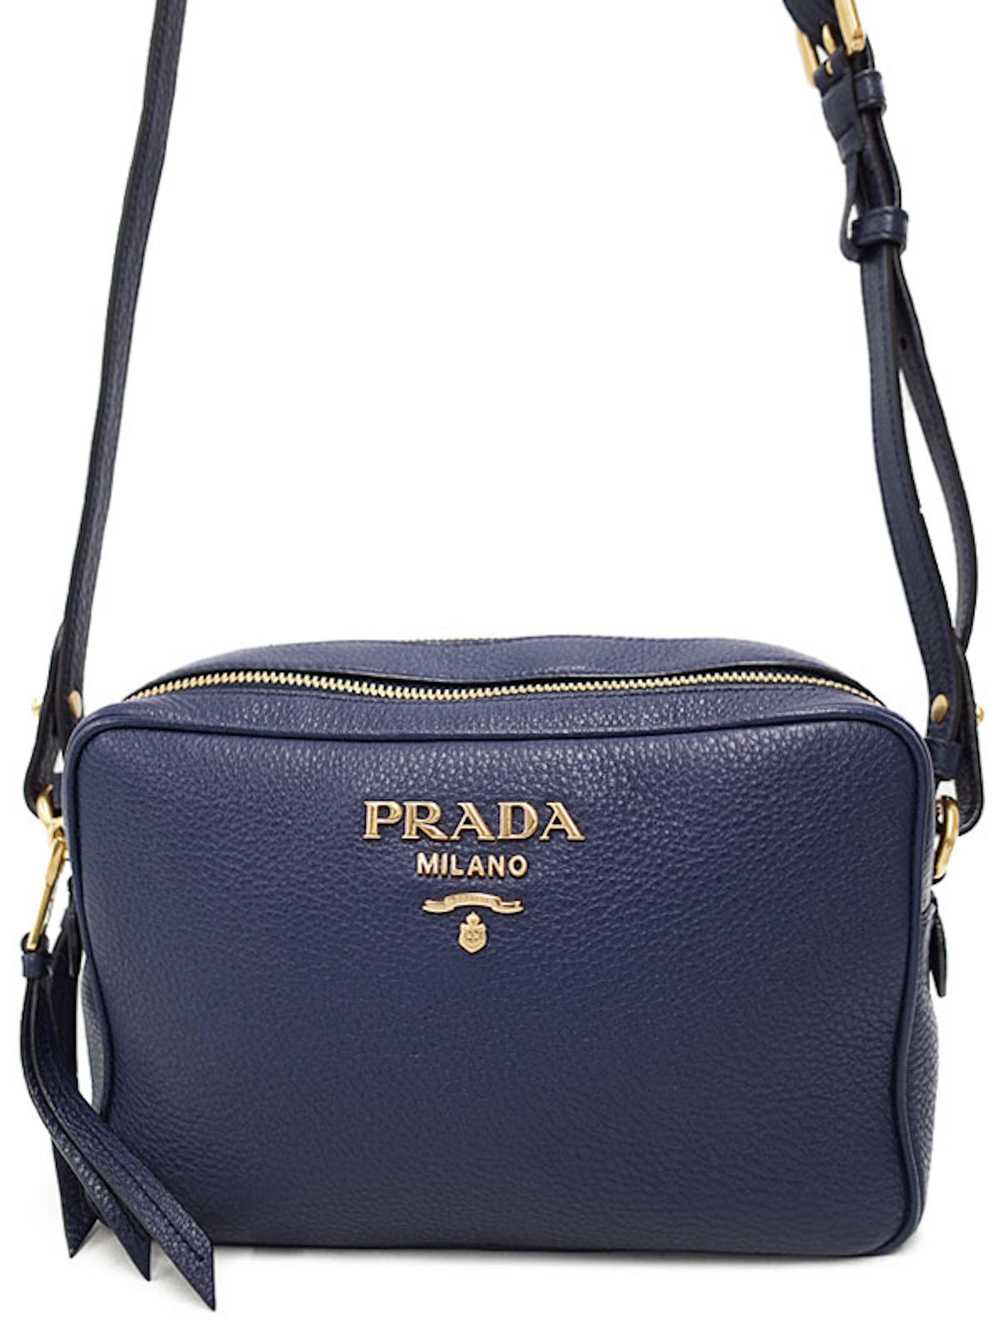 Prada Prada Leather Shoulder Bag Navy - image 1